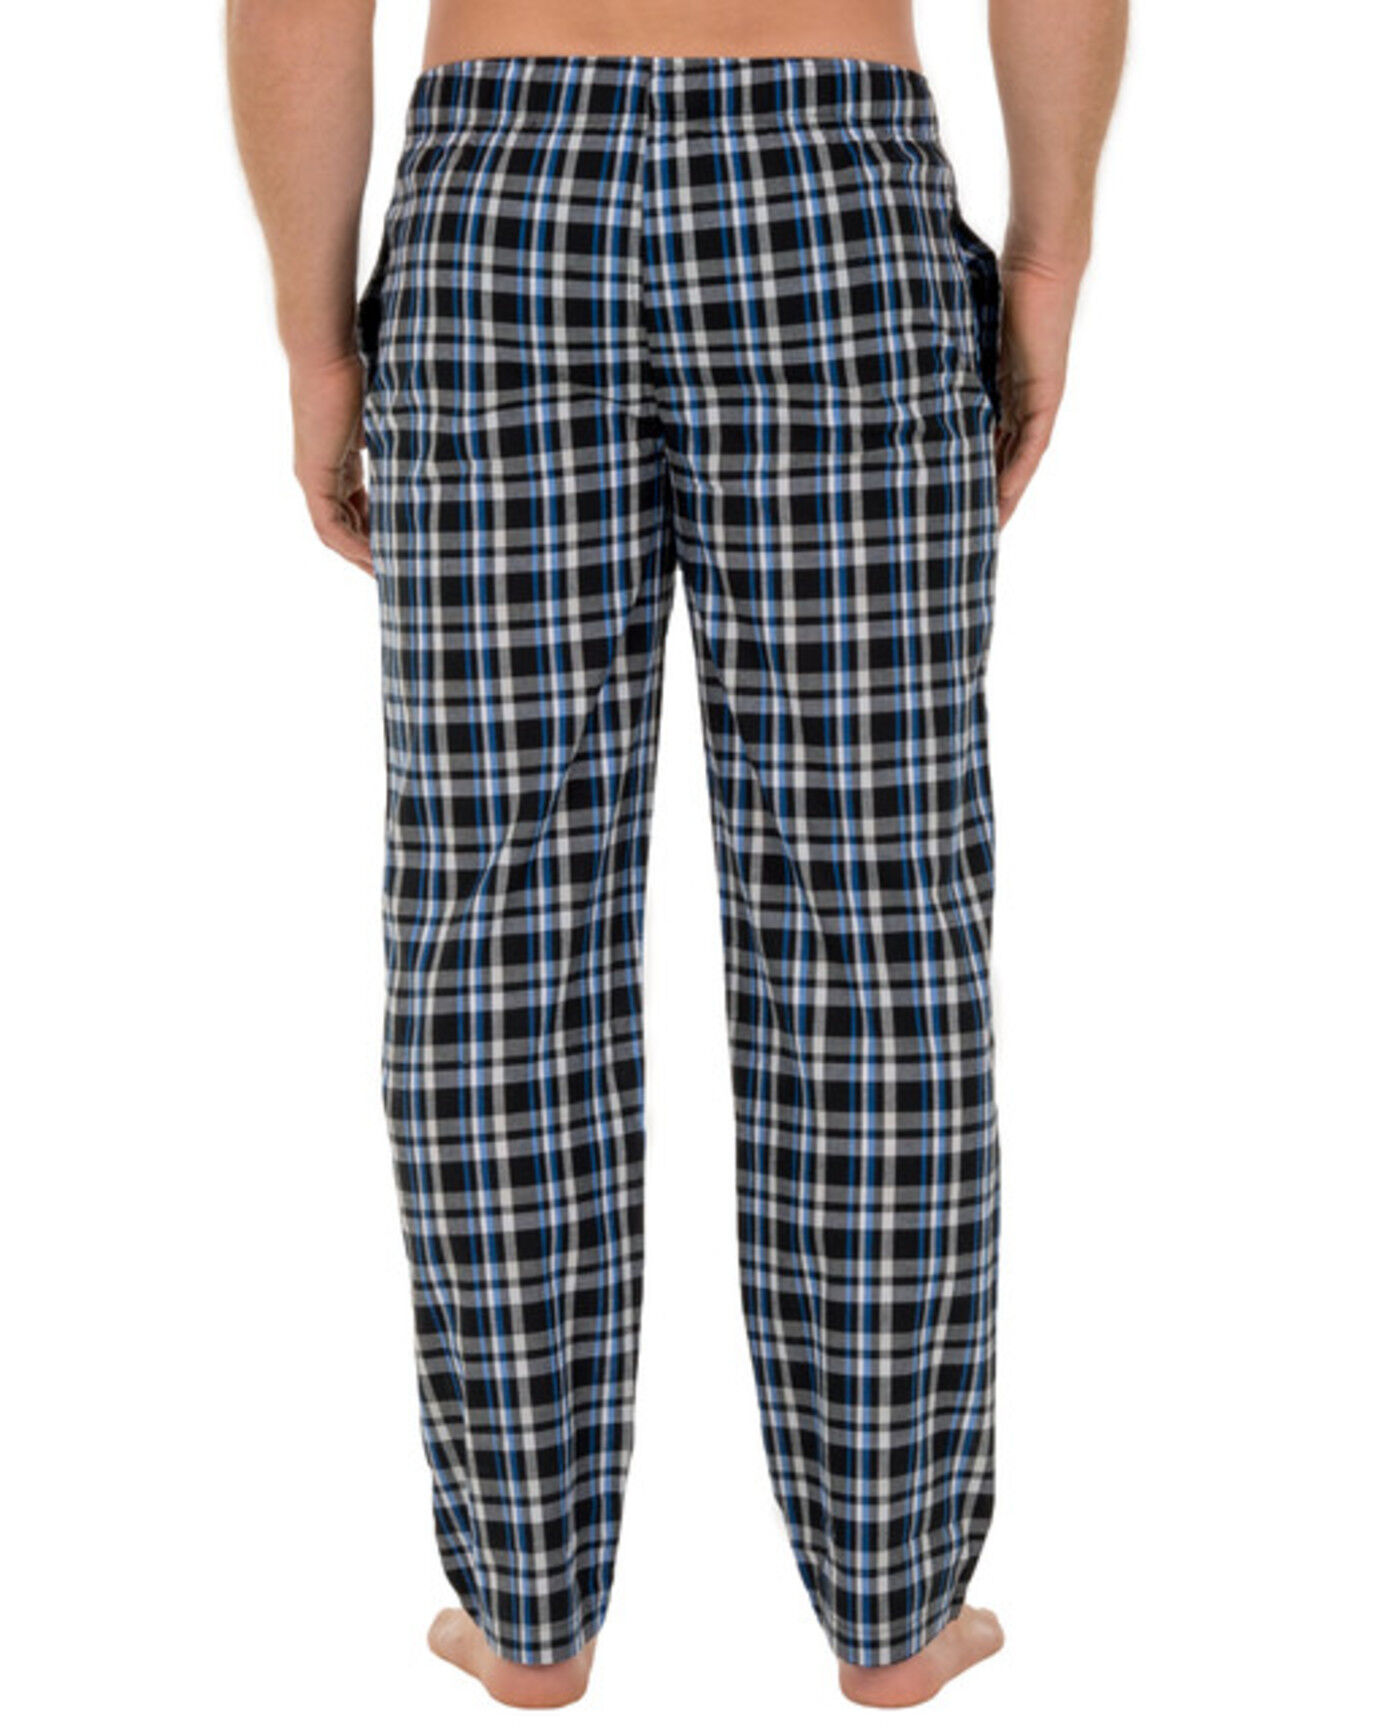 Wholesale Pajamas & Sleepwear | Eros Wholesale | eroswholesale.com